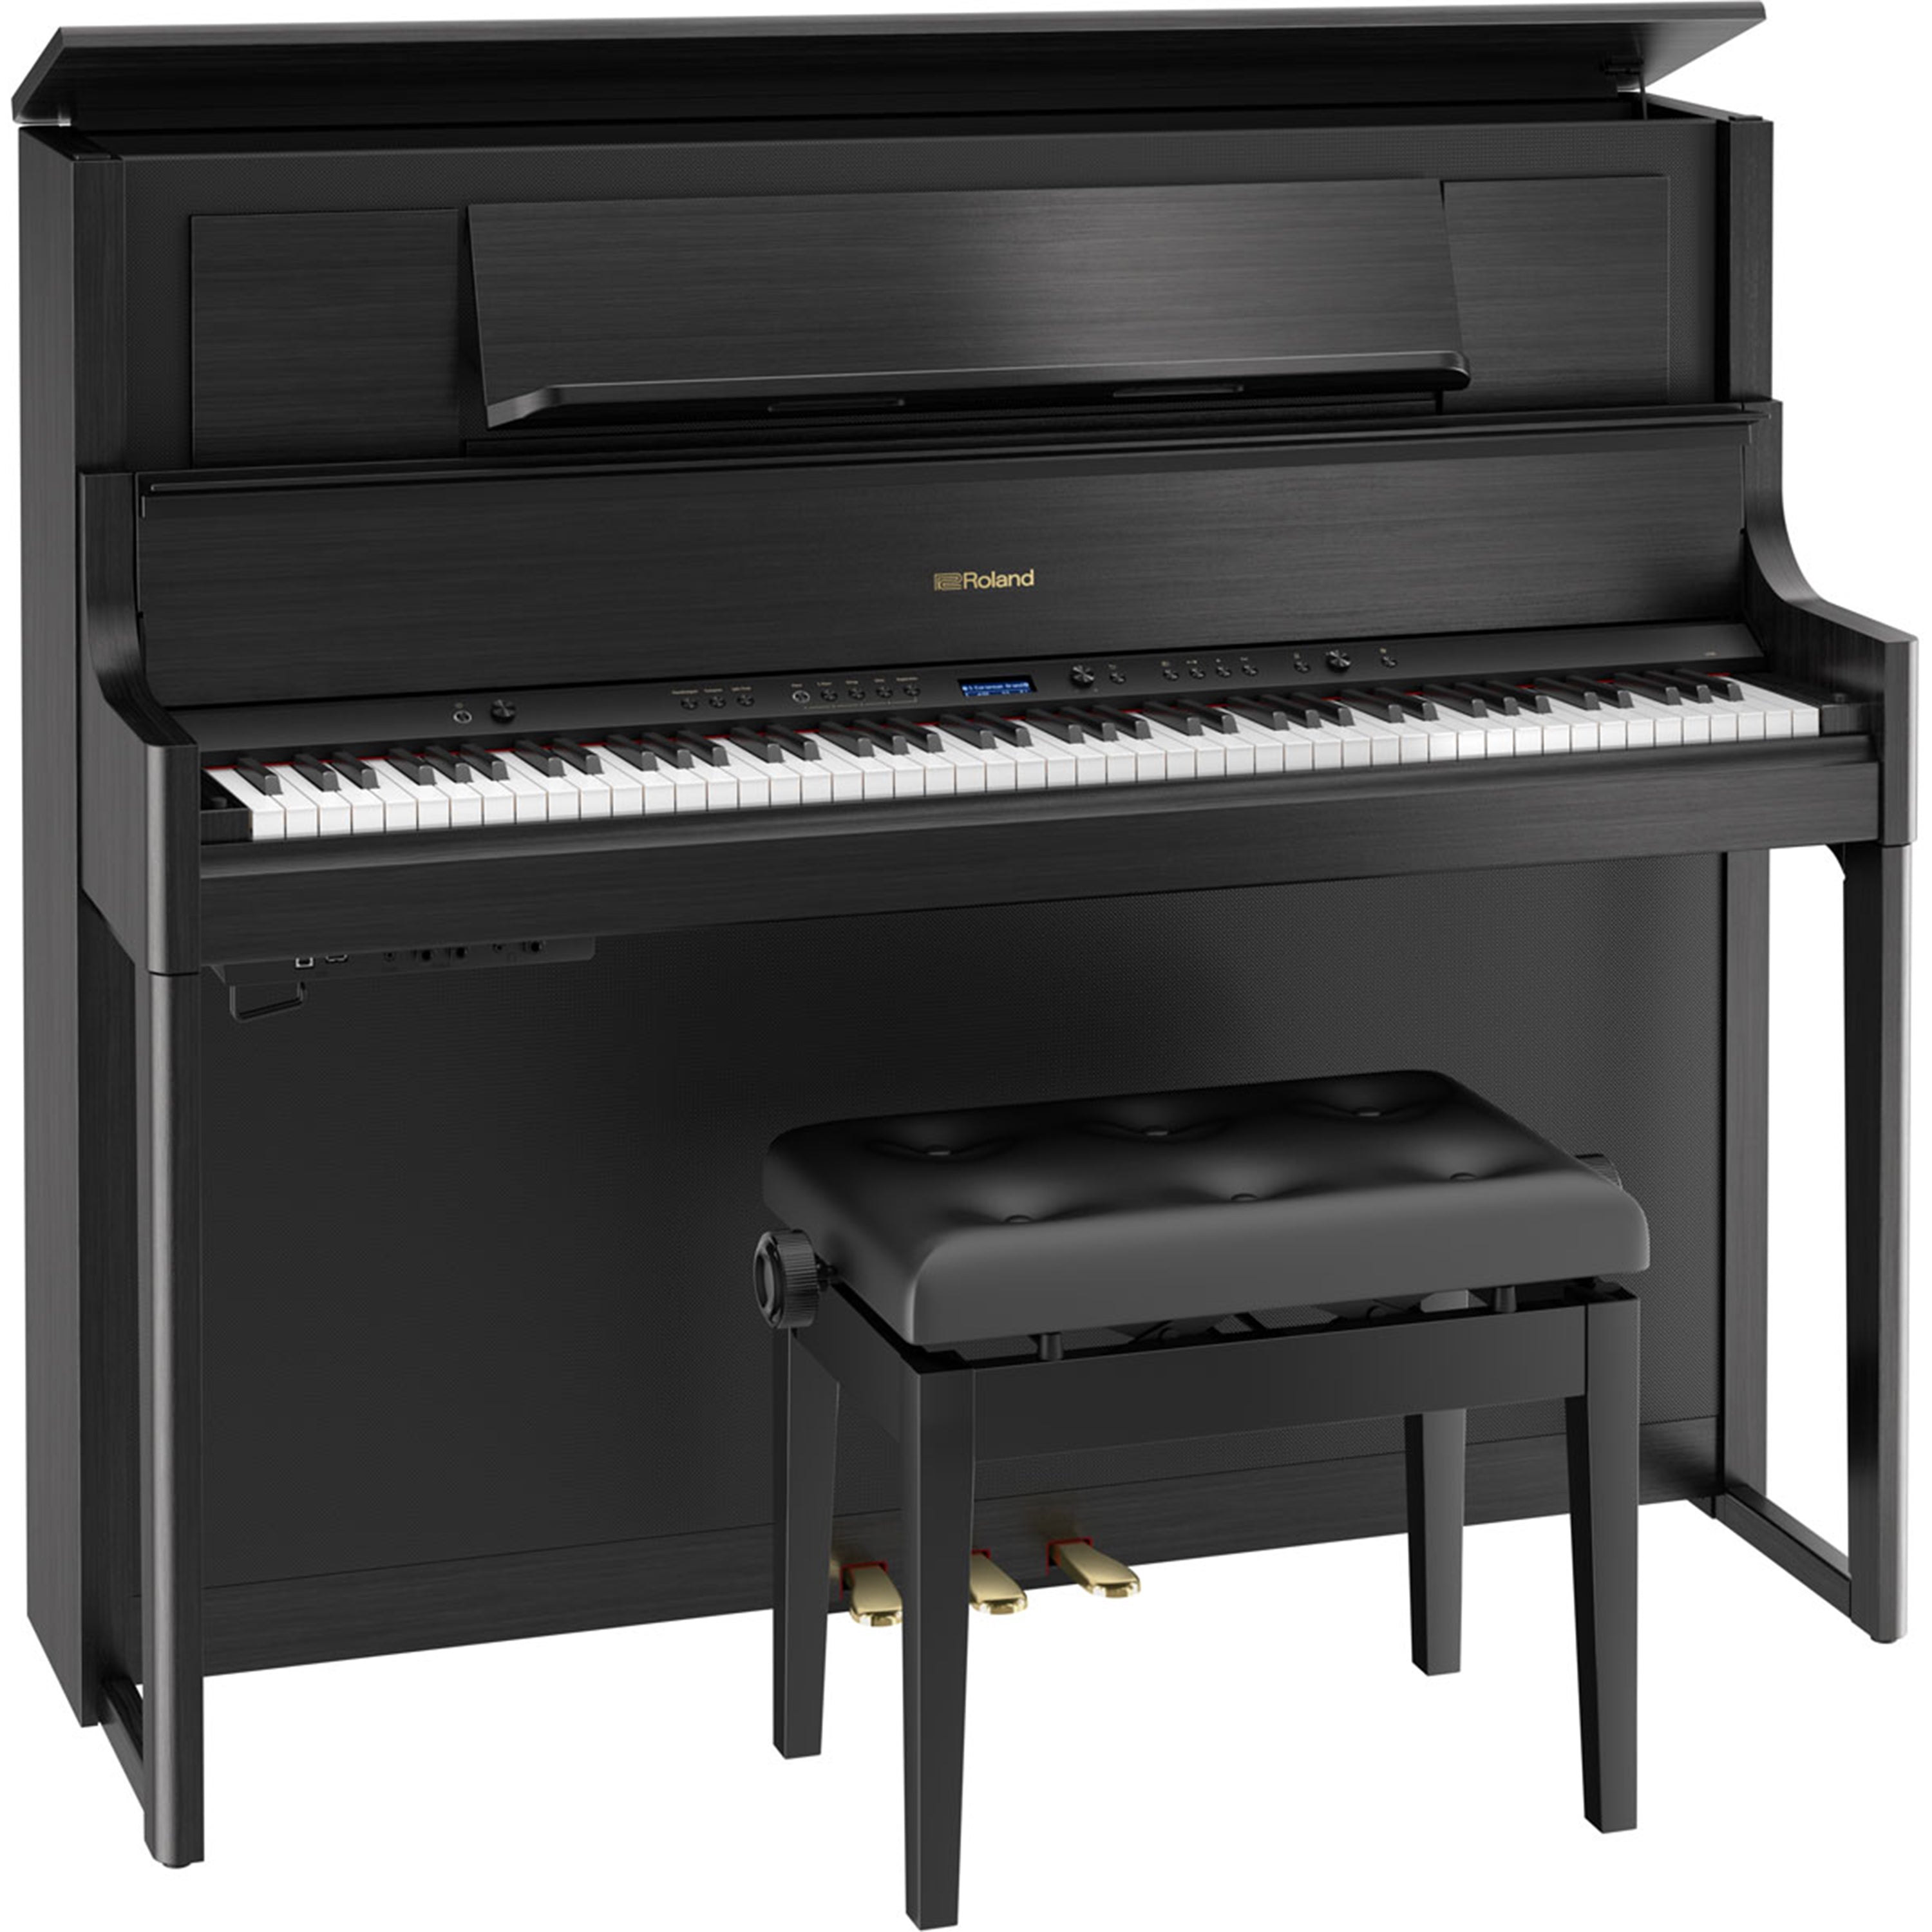 Roland LX708 Digital Piano - Charcoal Black